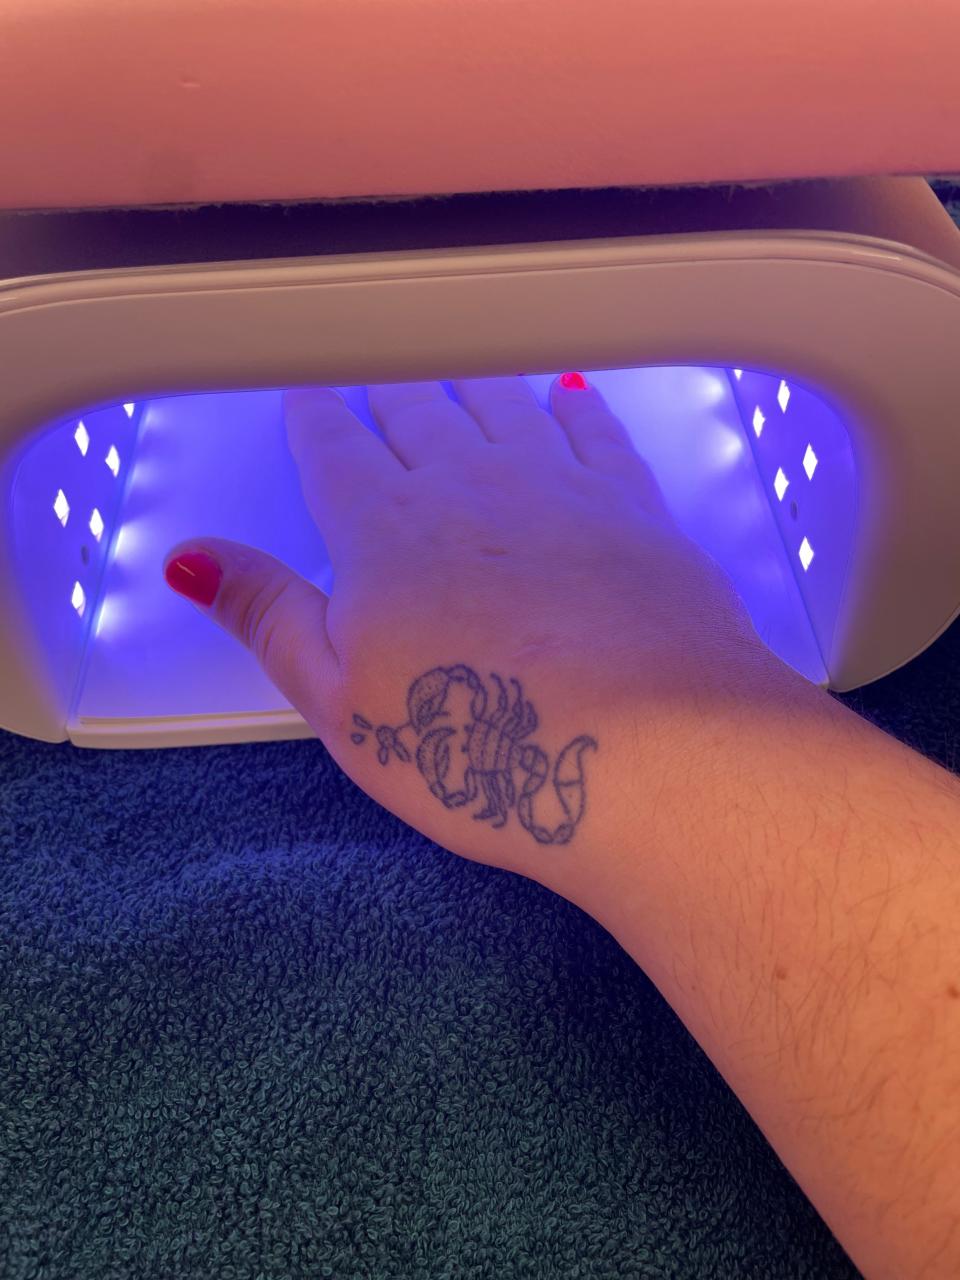 My BIAB nails curing under a UV-LED light.